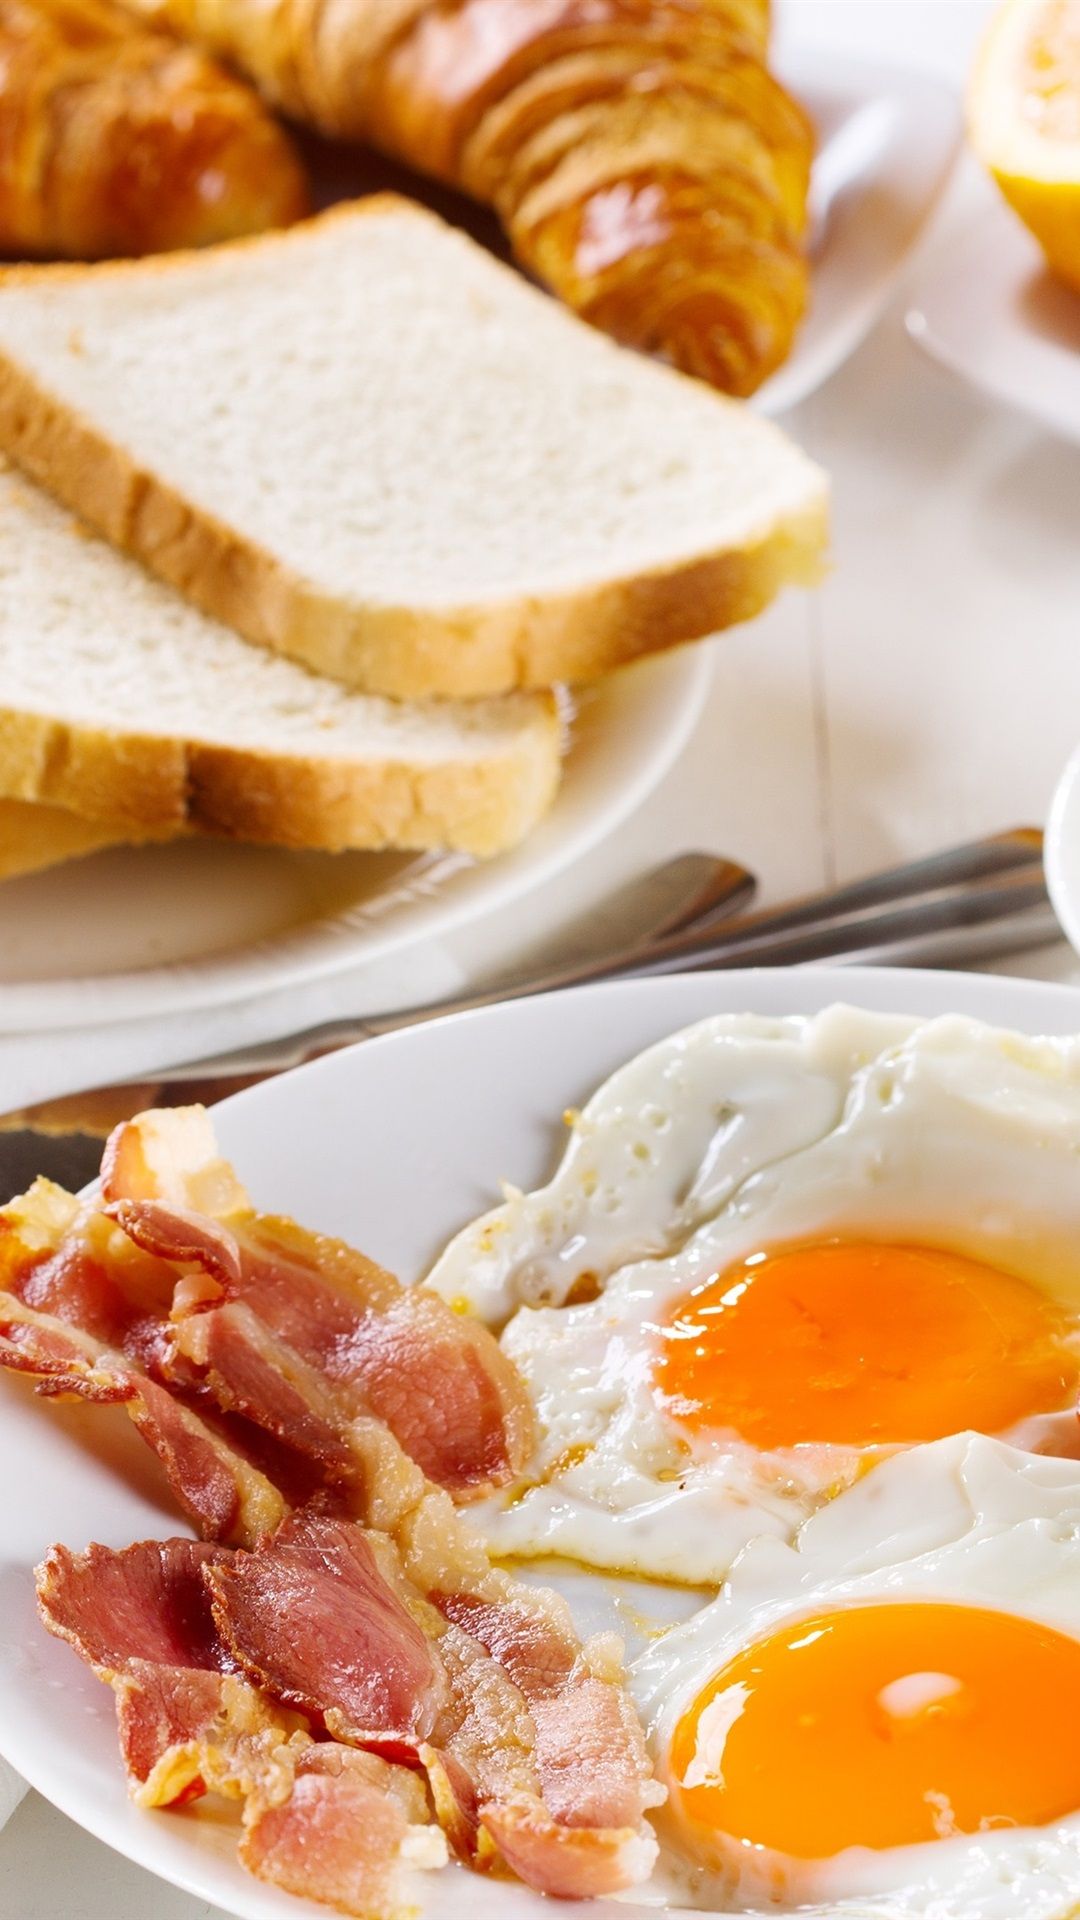 1080x1920 Breakfast Coffee Scrambled Eggs Bread Orange 1080x1920 Iphone 8 7 6 6s Plus Wallpaper Background Picture Image